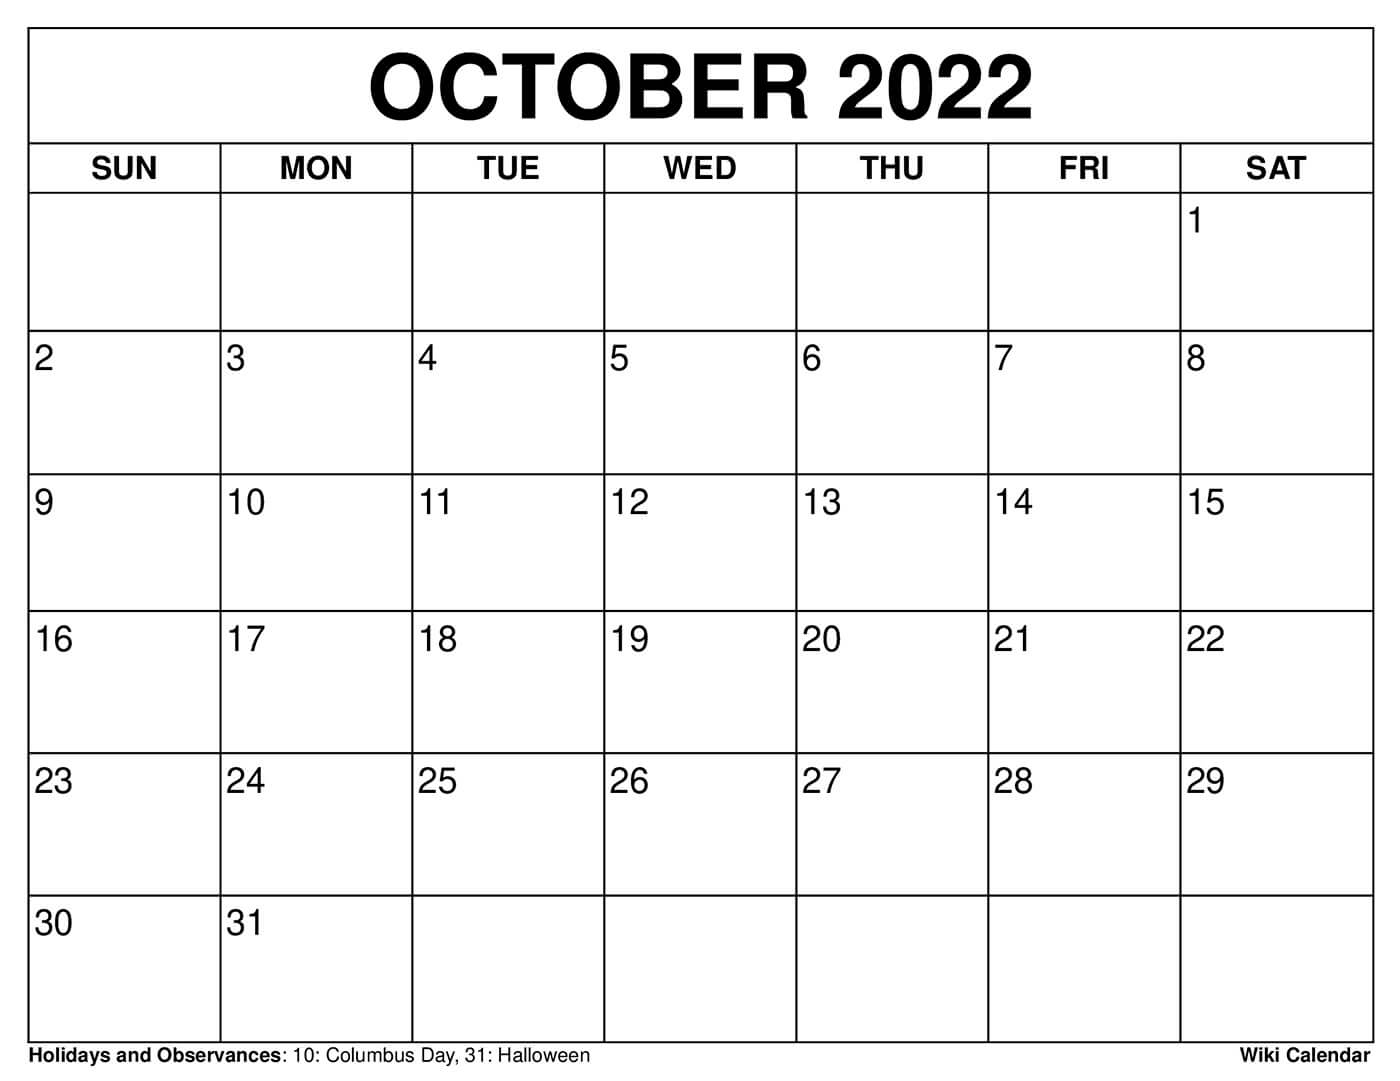 October Calendar Template 2022 Free Printable October 2022 Calendars - Wiki Calendar